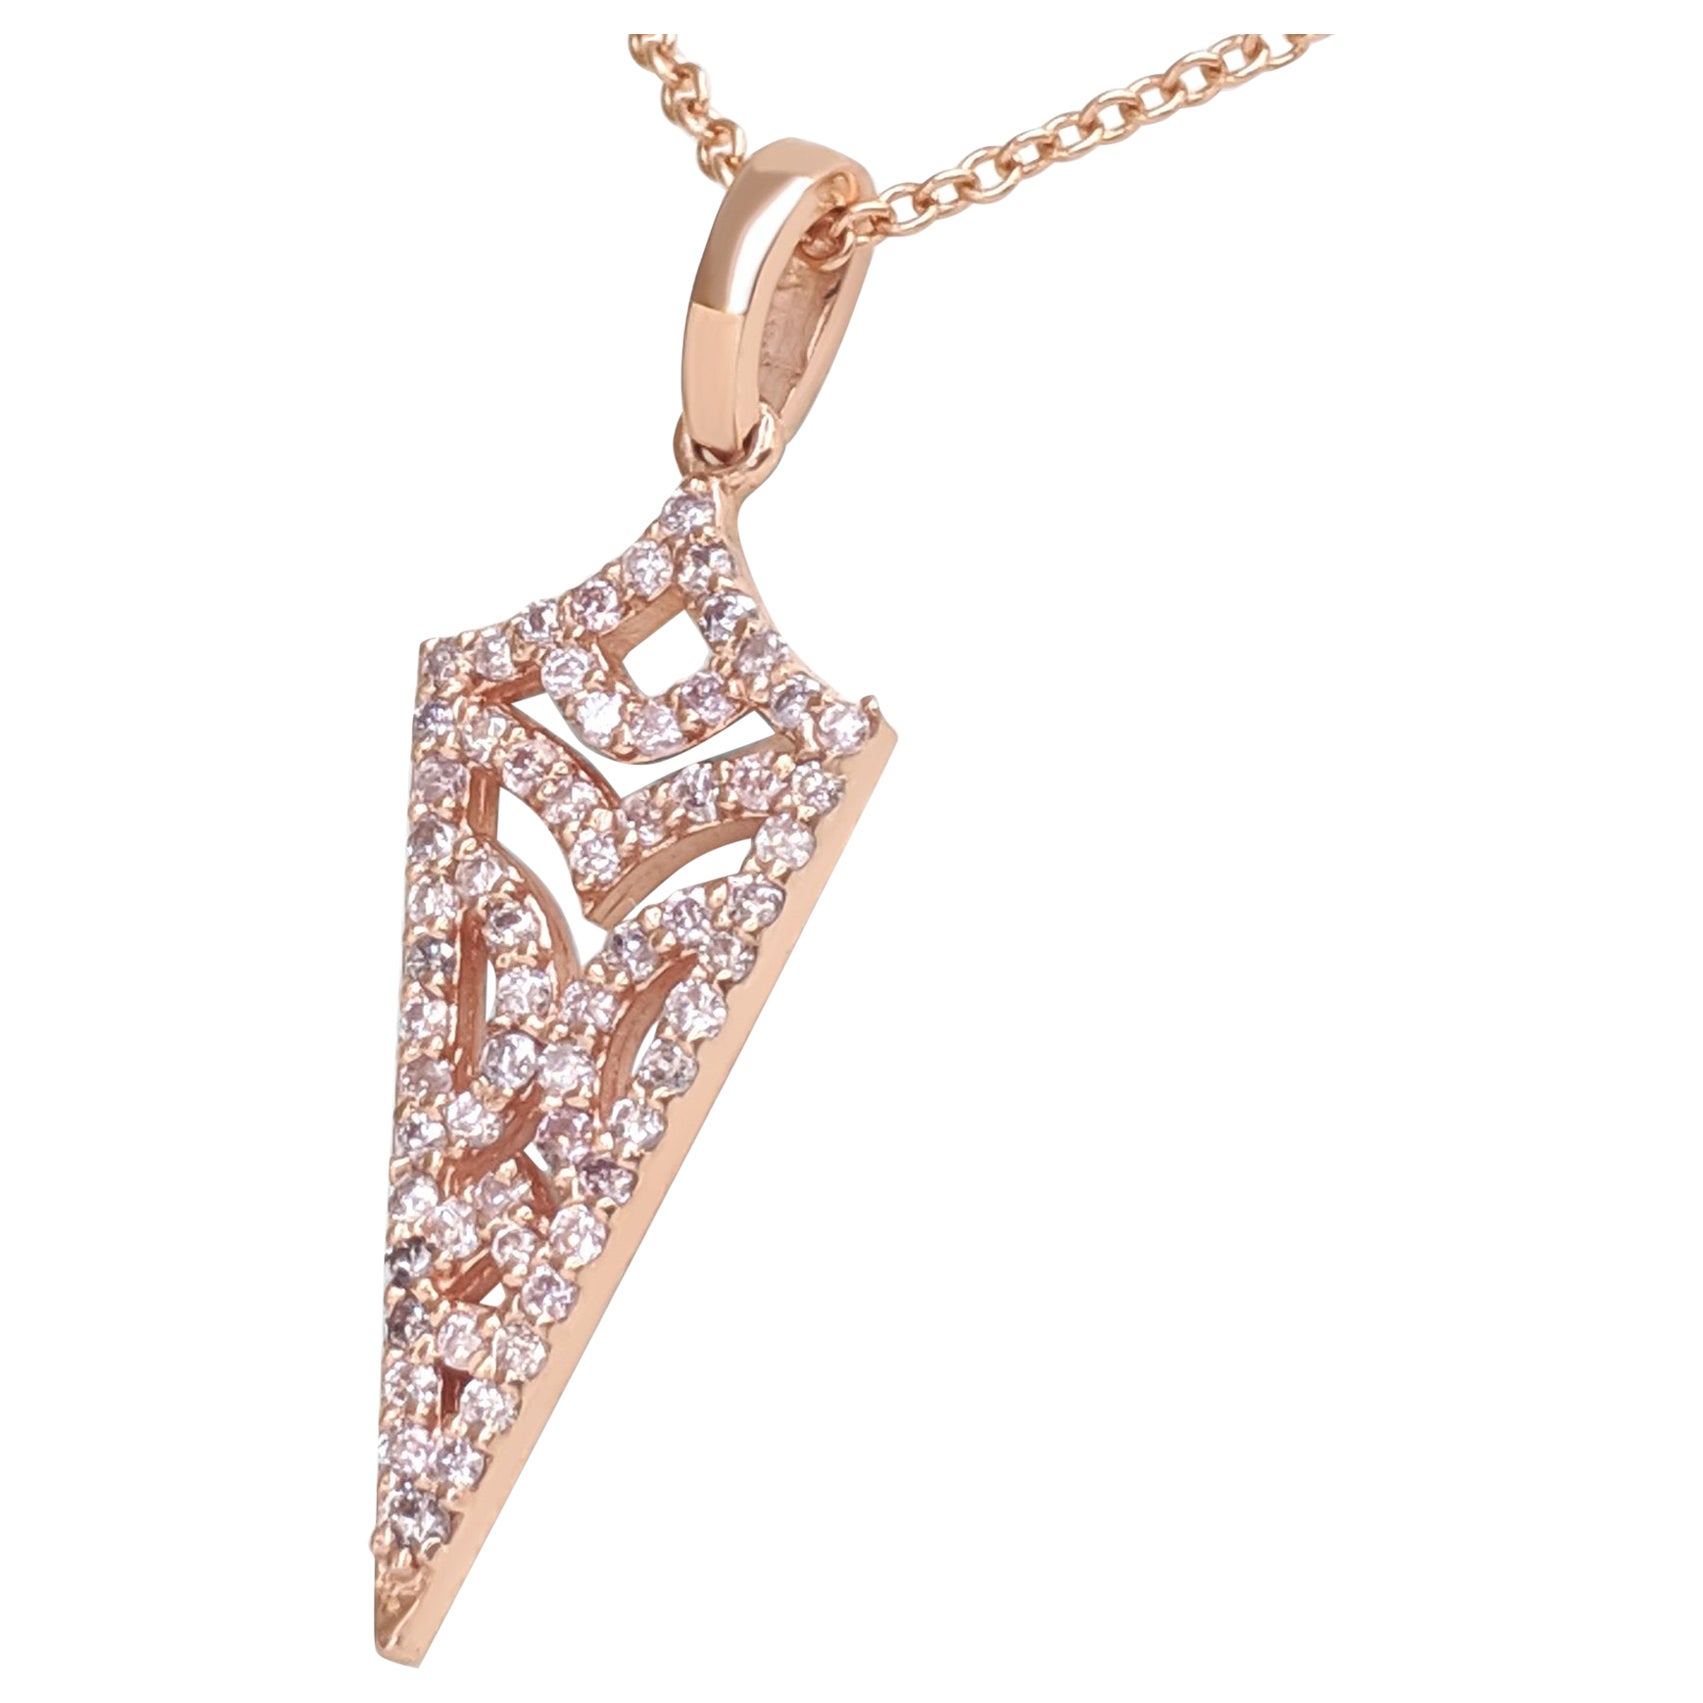 NO RESERVE! 0.20 Ct Fancy Pink Diamond 14 kt. Rose Gold Pendant Necklace